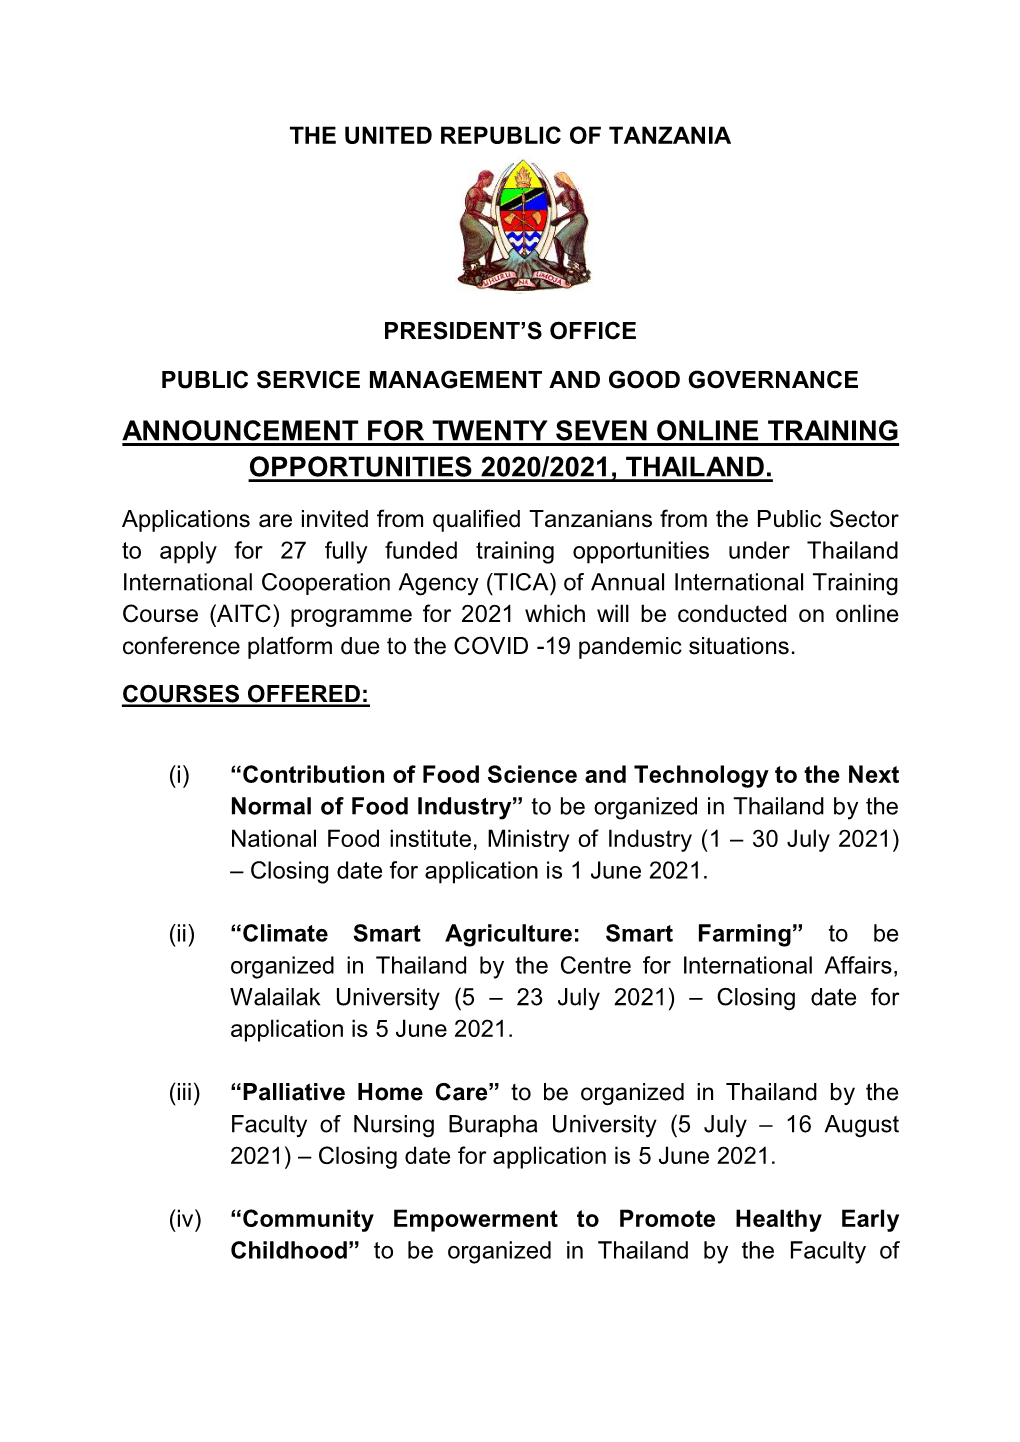 Announcement for Twenty Seven Online Training Opportunities 2020/2021, Thailand